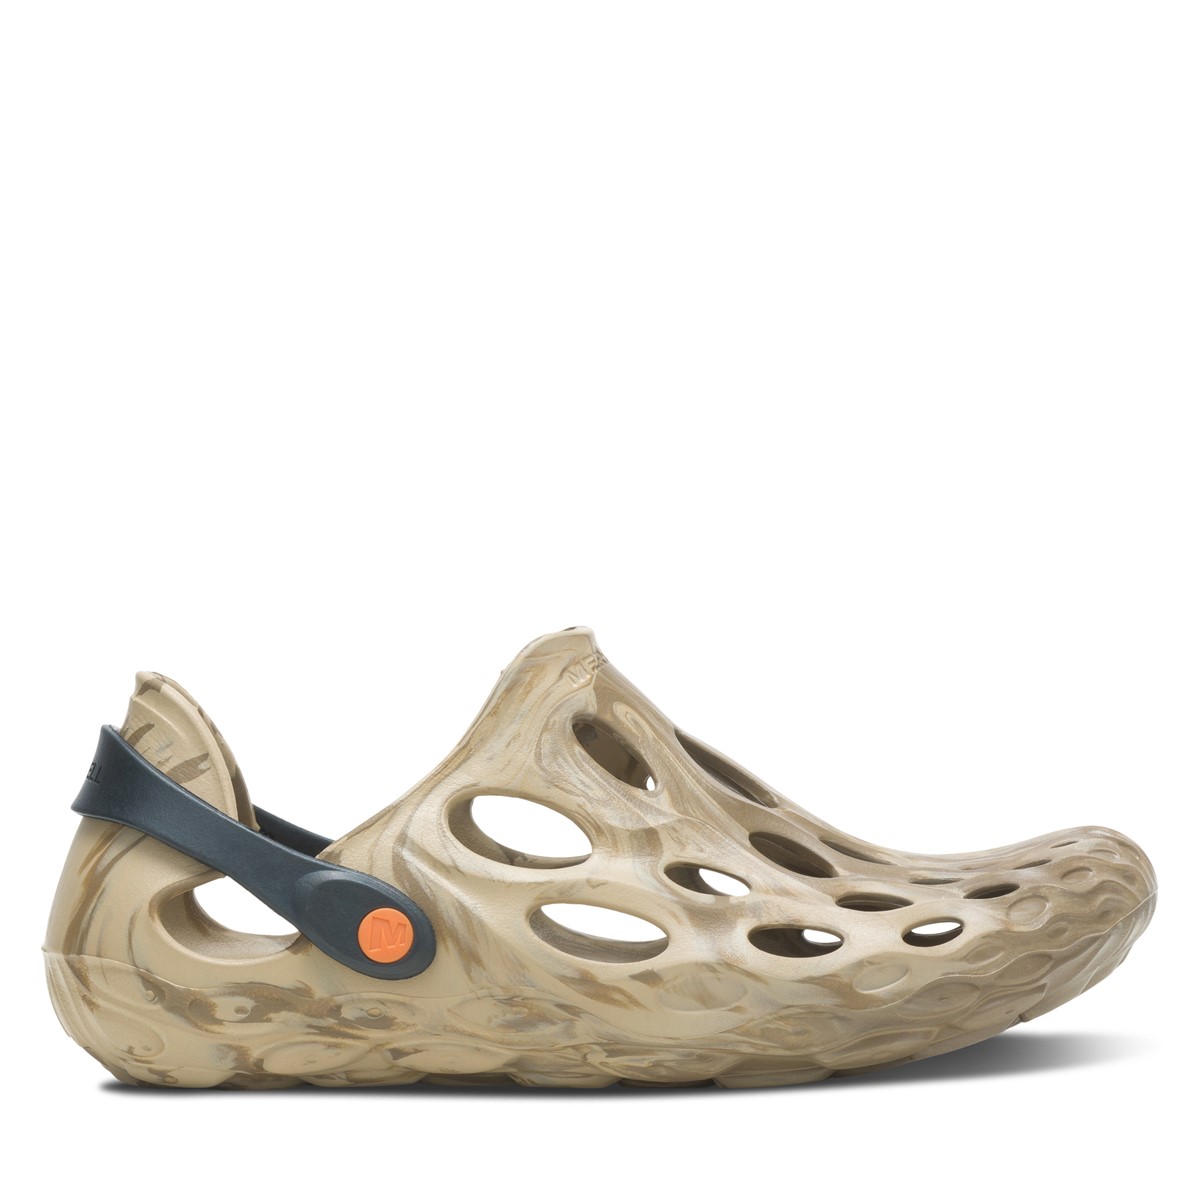 Men's Hydro Moc Sandals in Light Brown